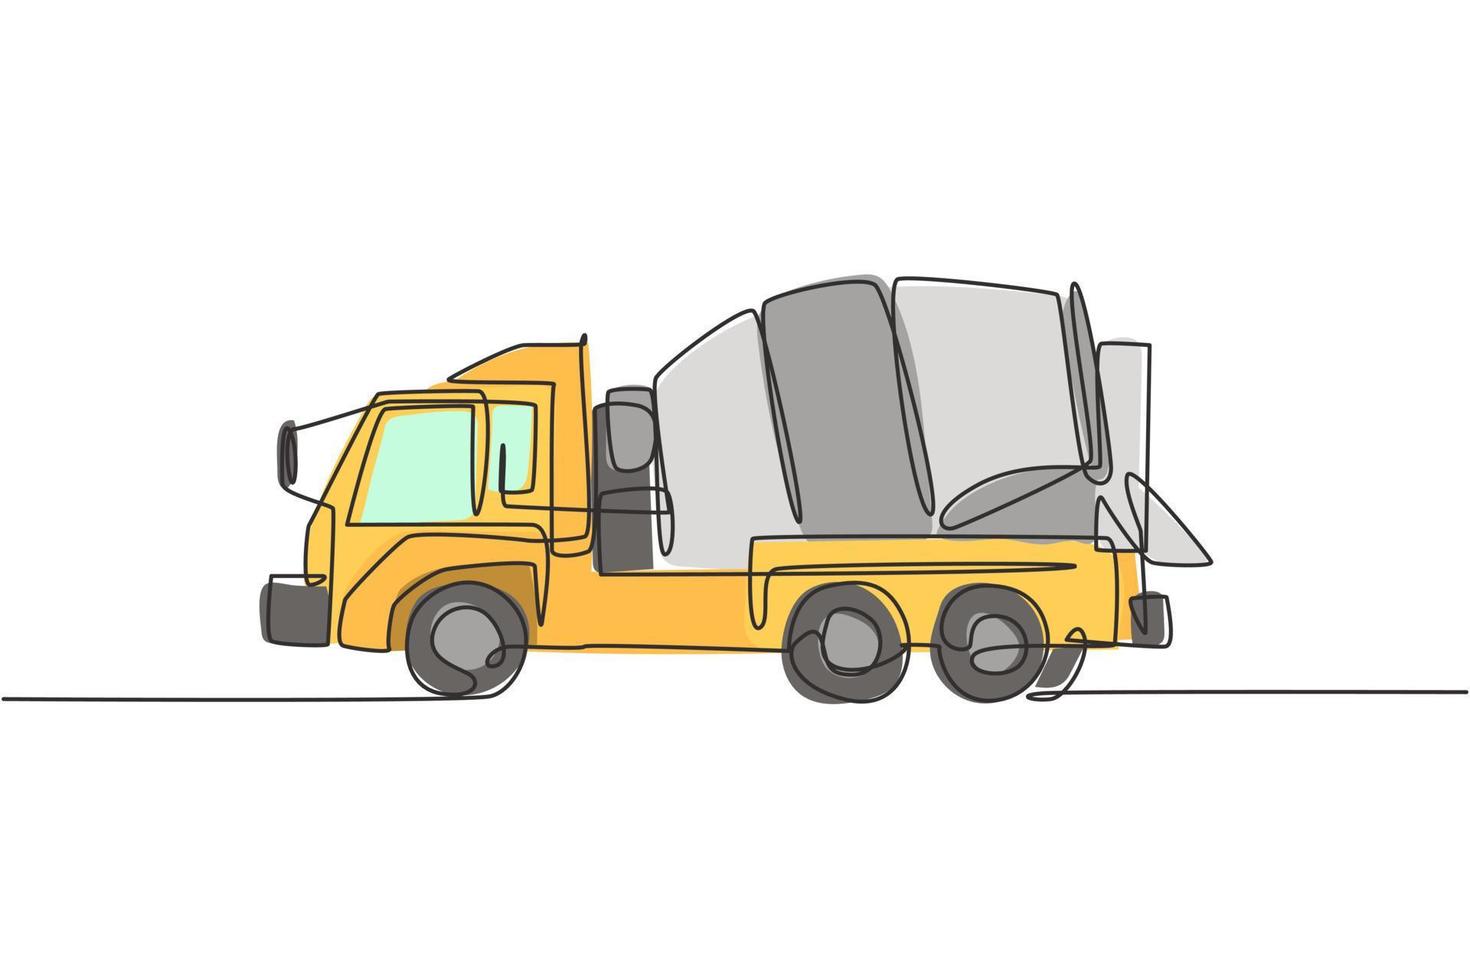 en enda linje ritning av lastbil mixer för mobil blandning cement vektor illustration, kommersiella fordon. tunga maskiner fordon konstruktion koncept. modern kontinuerlig linje grafisk ritdesign